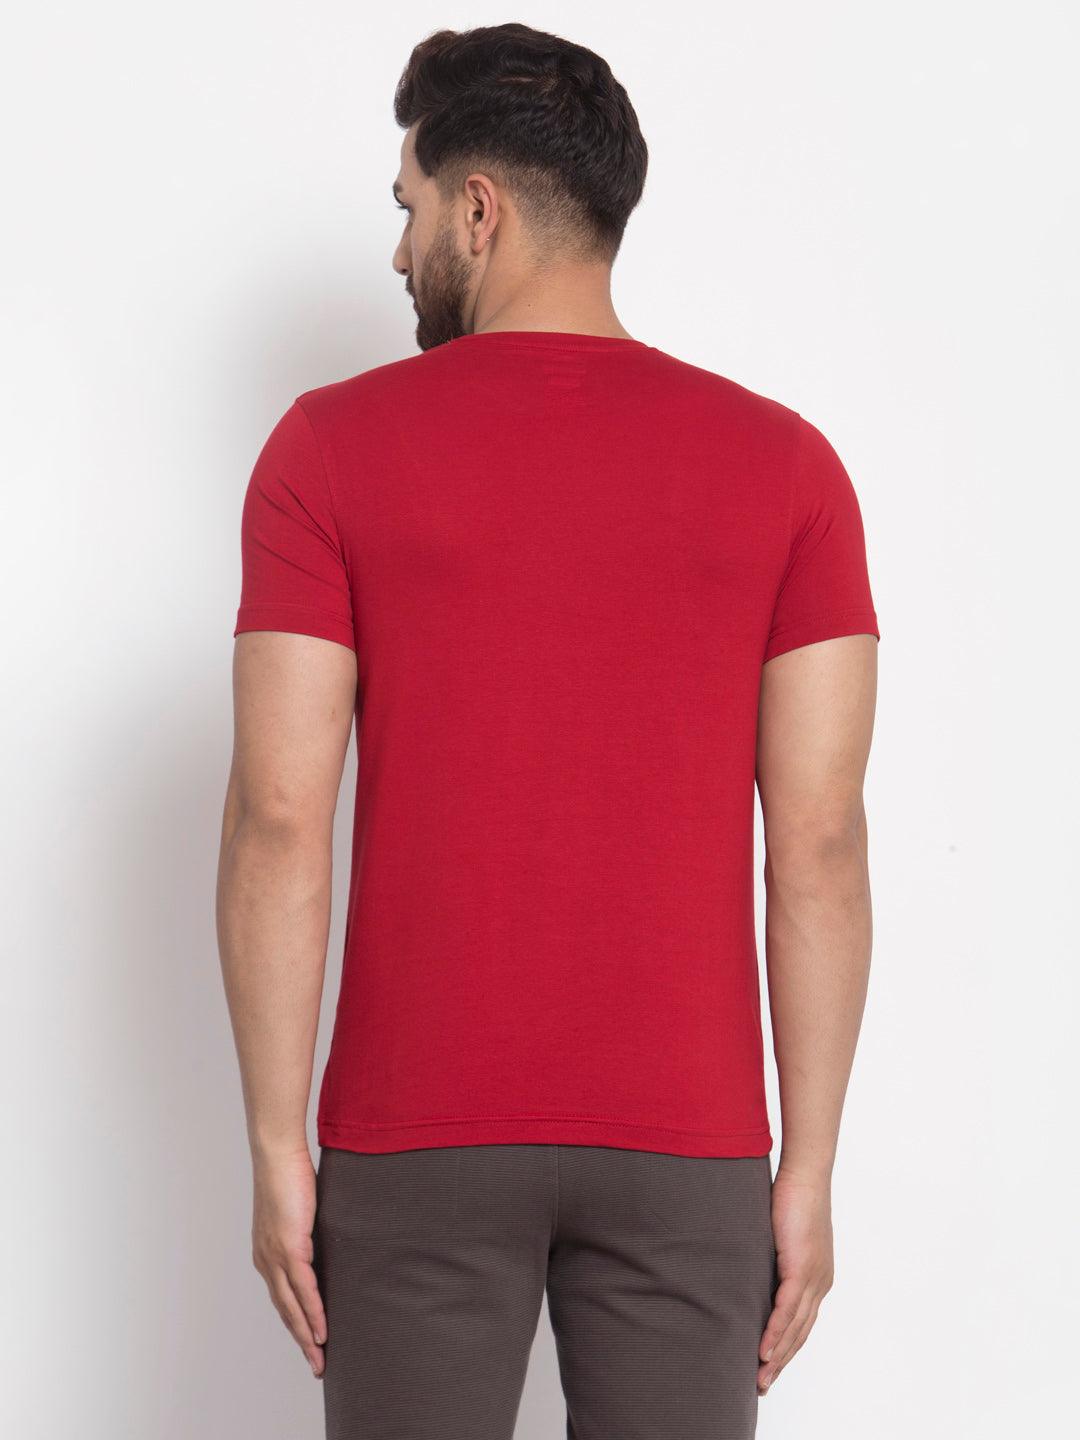 Sporto Men's Iron man Printed T-Shirt - Red